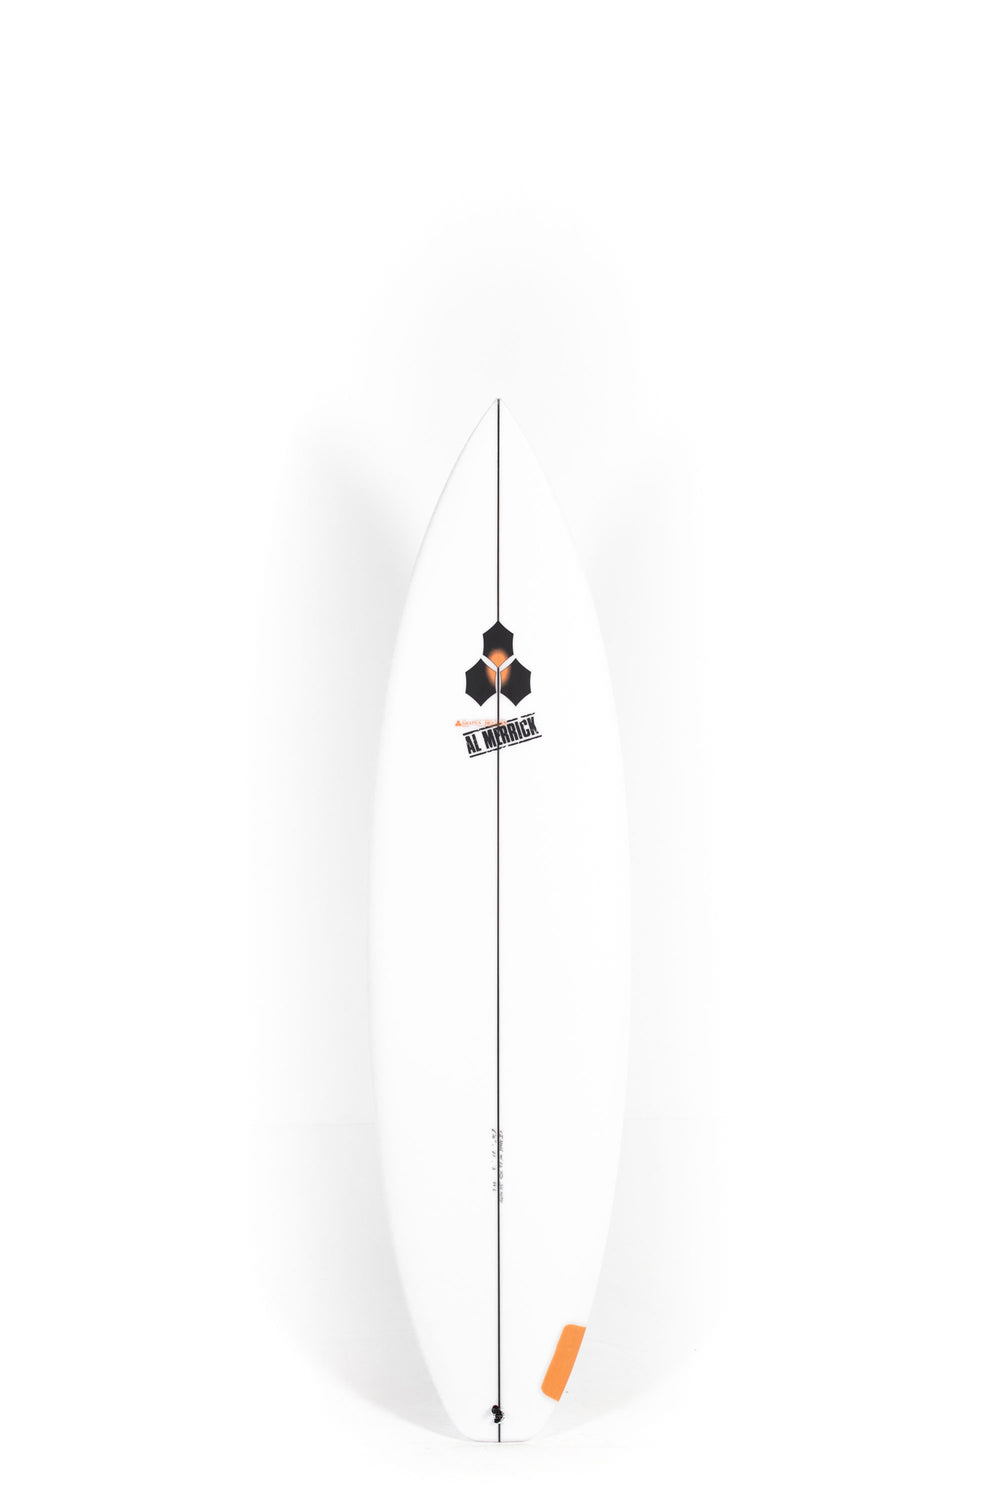 Pukas-Surf-Shop-Channel-Island-Surfboards-Big-Happy-Al-Merrick-6_10_-CI32026